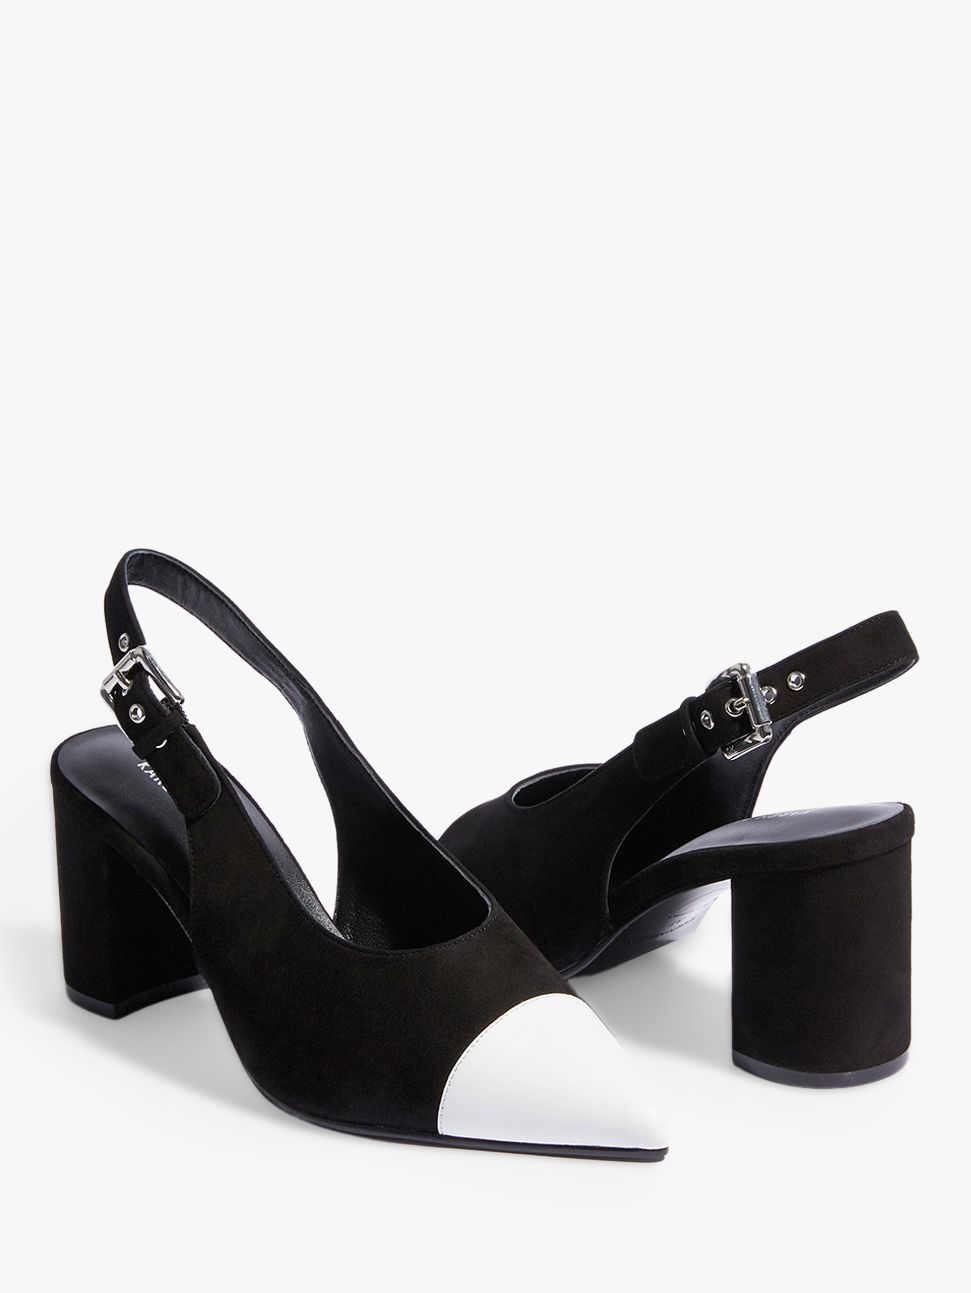 Karen Millen Block Heel Slingback Court Shoes, Black/White